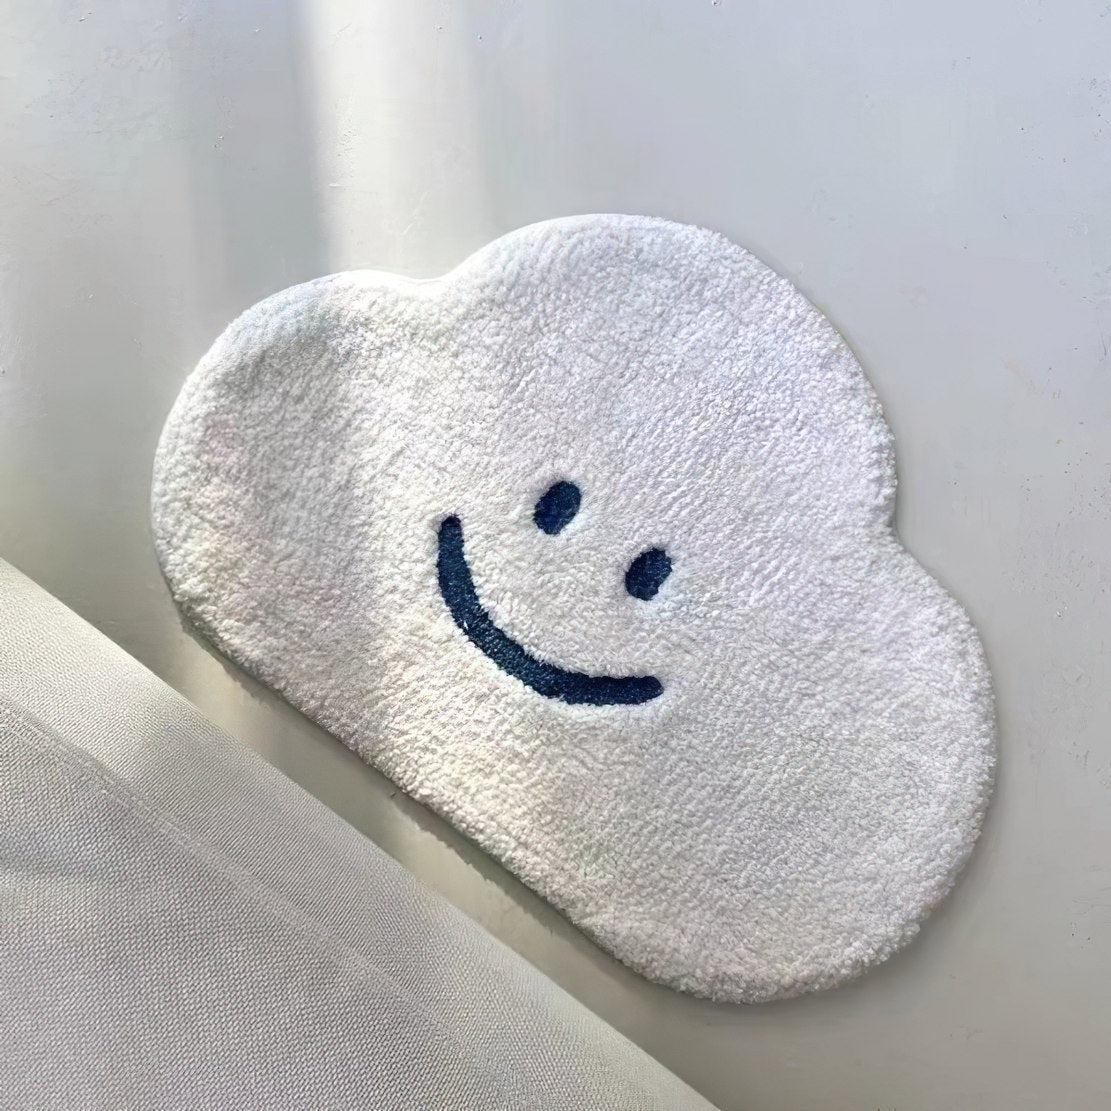 White, cloud smiley face floor mat